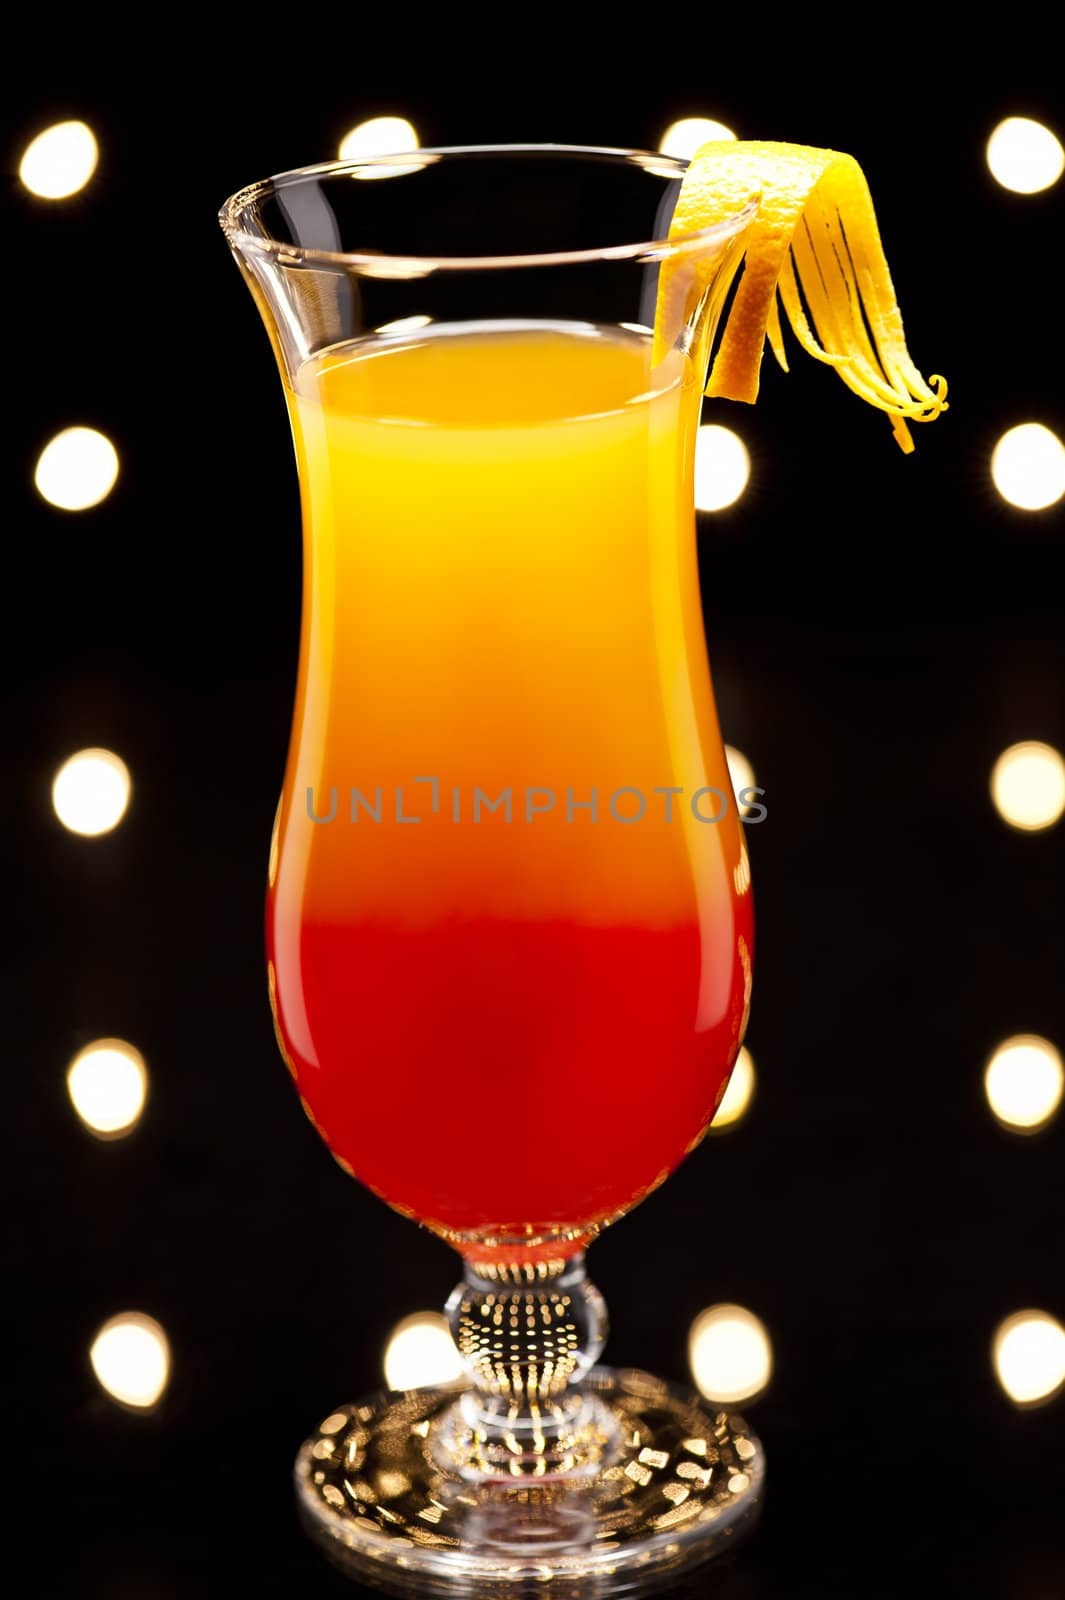 Tequila Sunrise cocktail